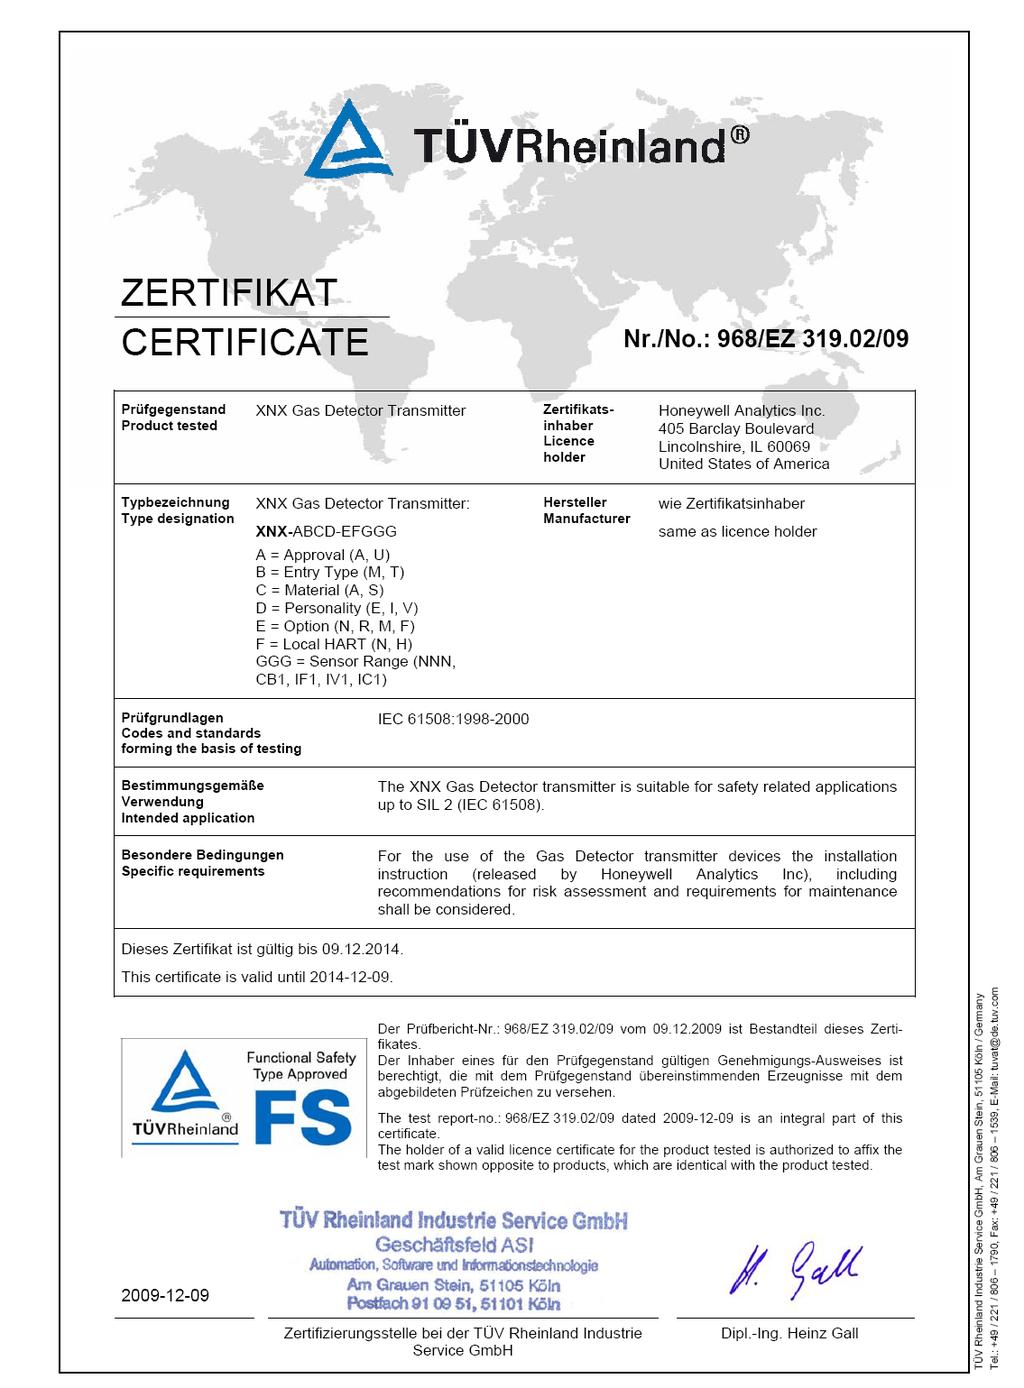 1 SIL 2 Certificates 1.